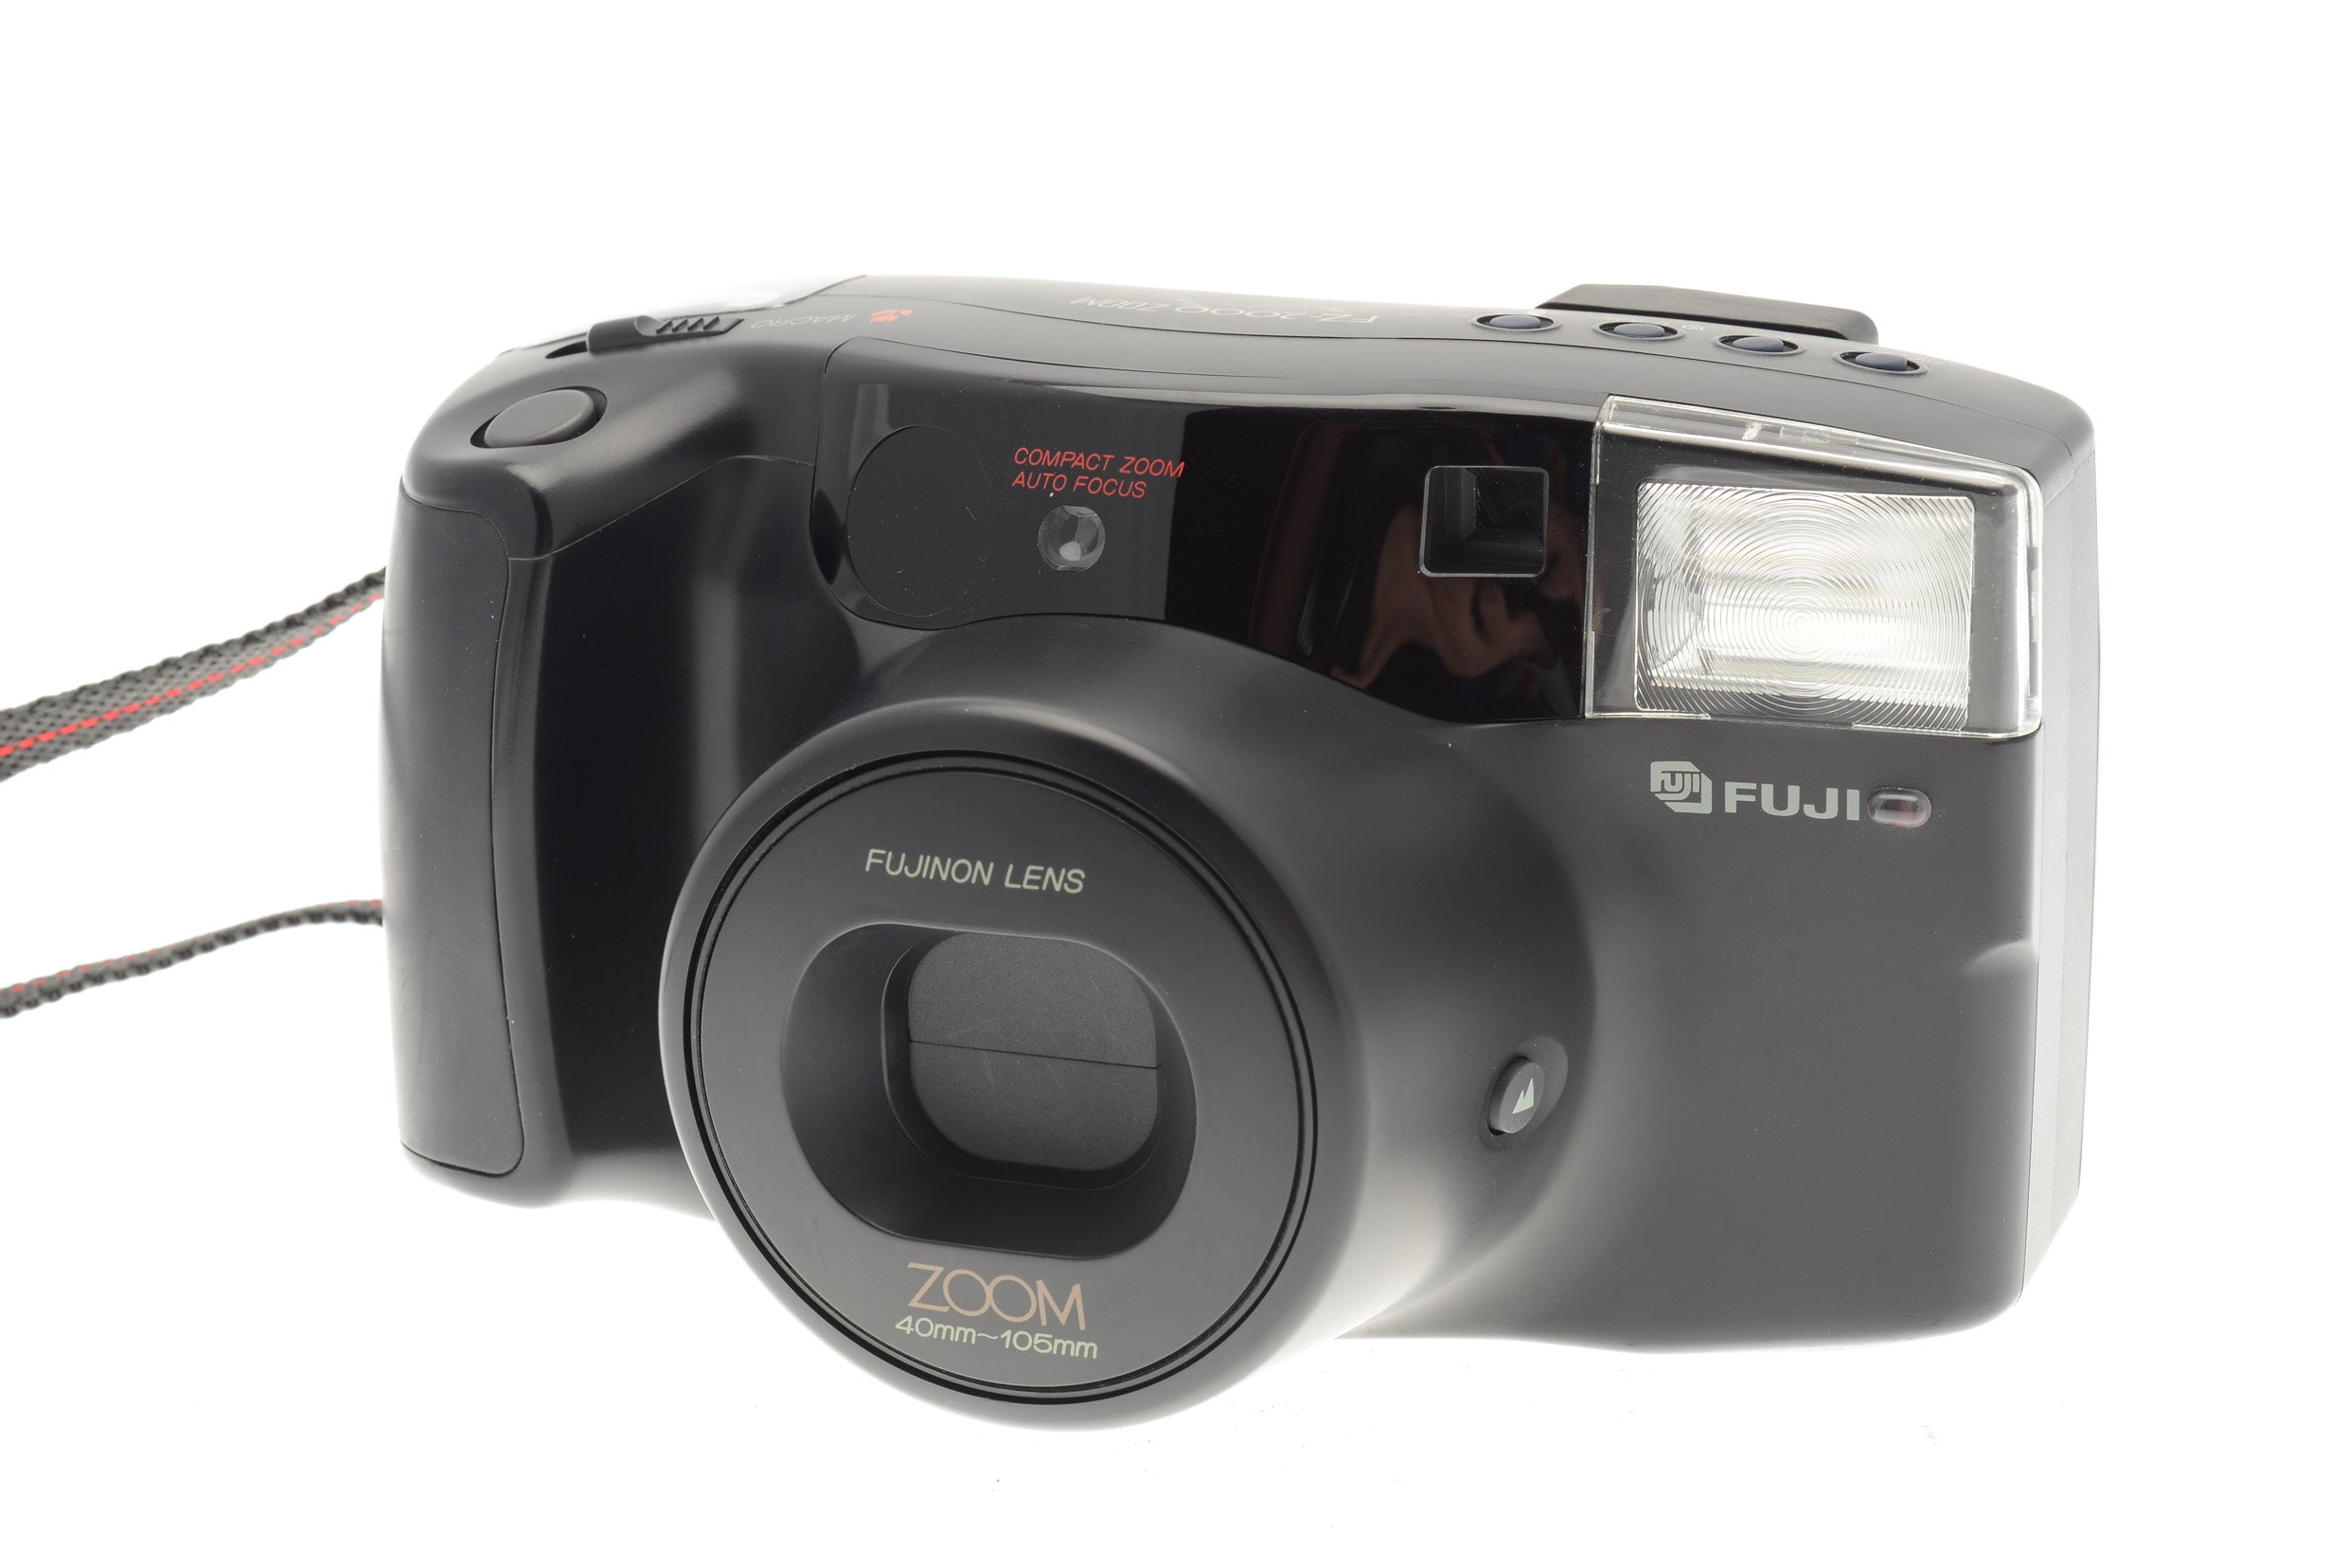 opgraven partitie tempo Fuji FZ-2000 Zoom - Camera – Kamerastore